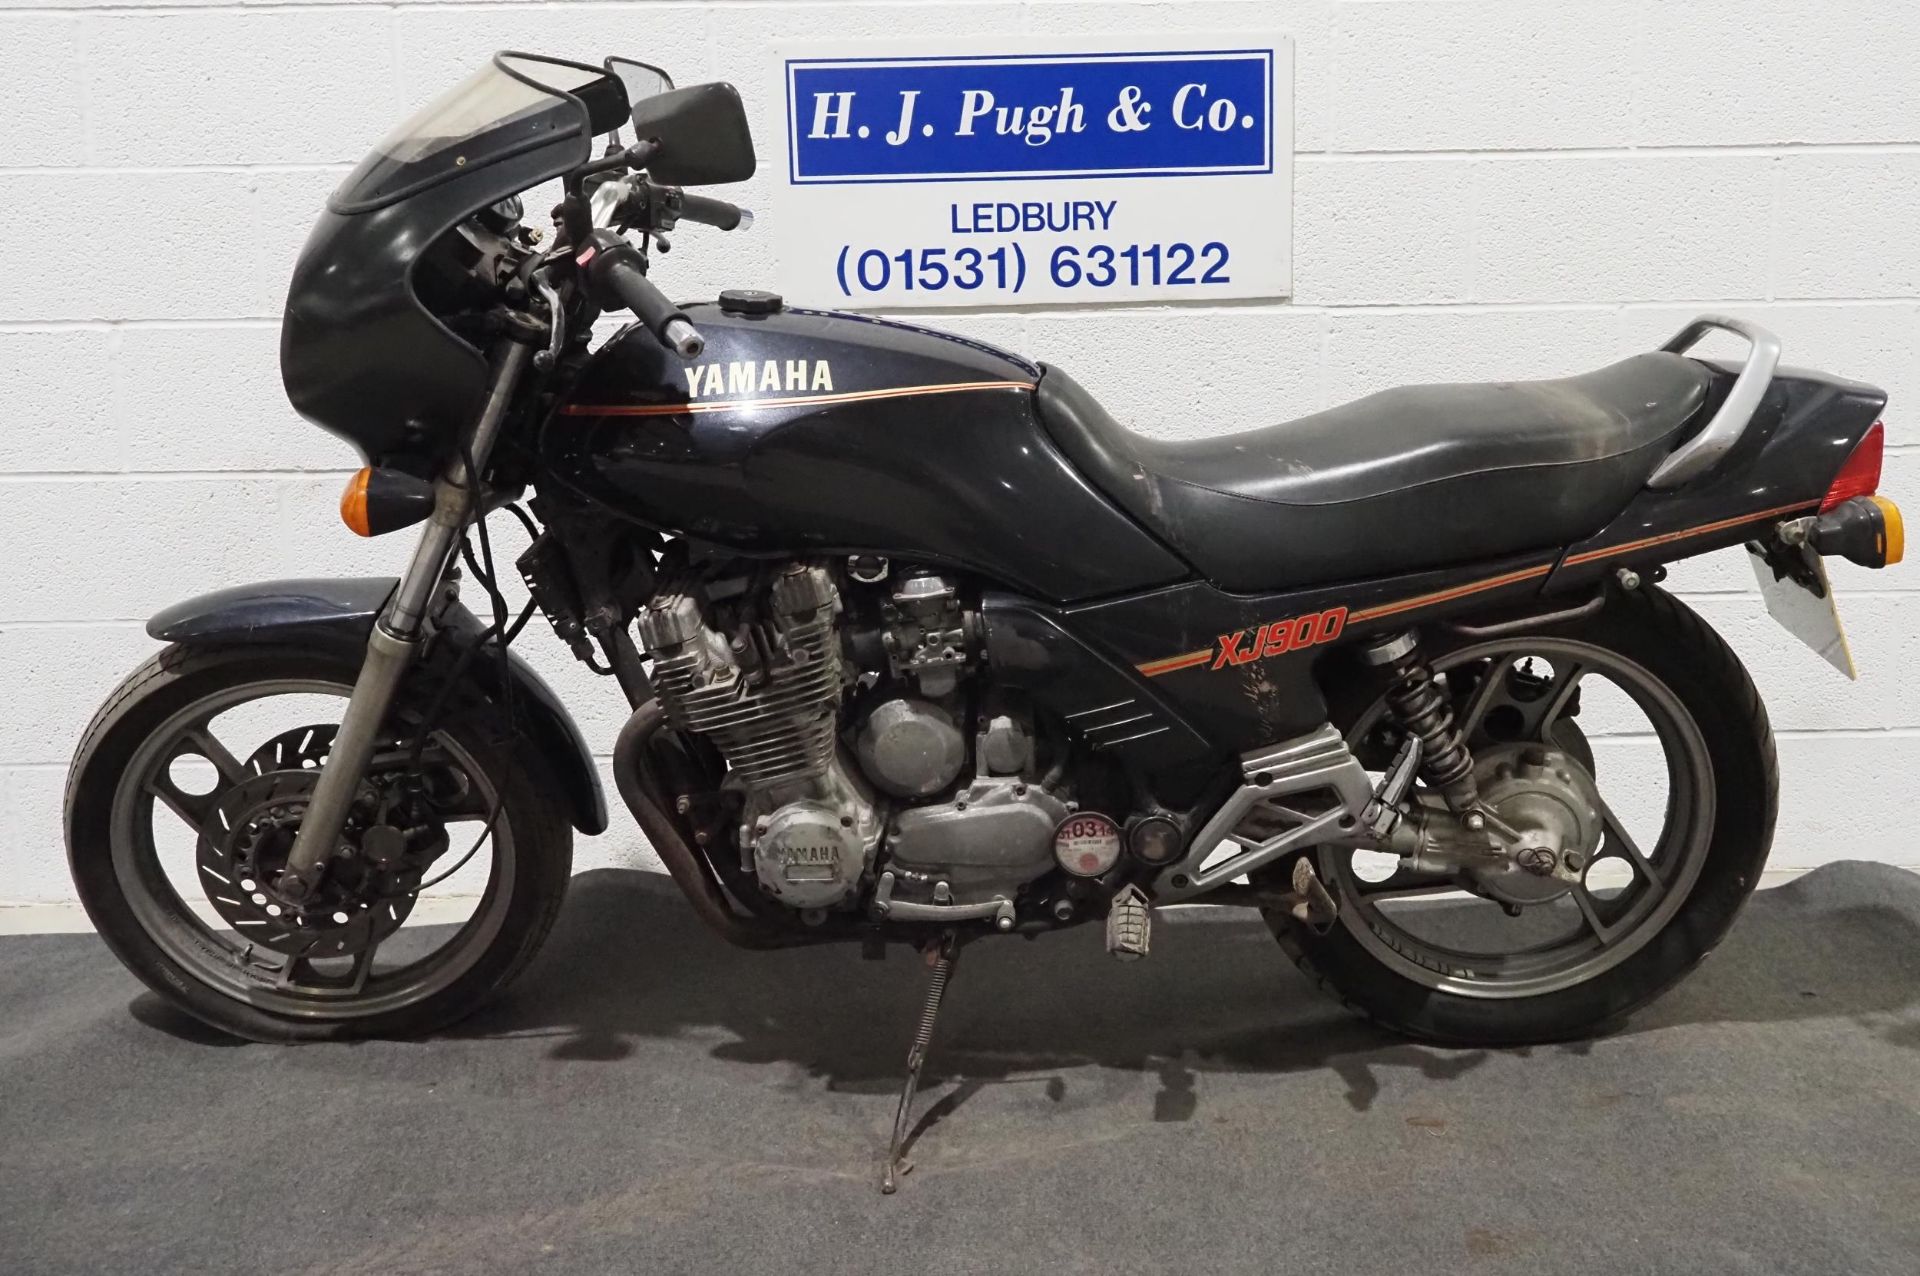 Yamaha XJ900 motorcycle. 1990. 891cc. Frame No. 58L039142. Engine No. 58L039142. Needs - Image 6 of 7